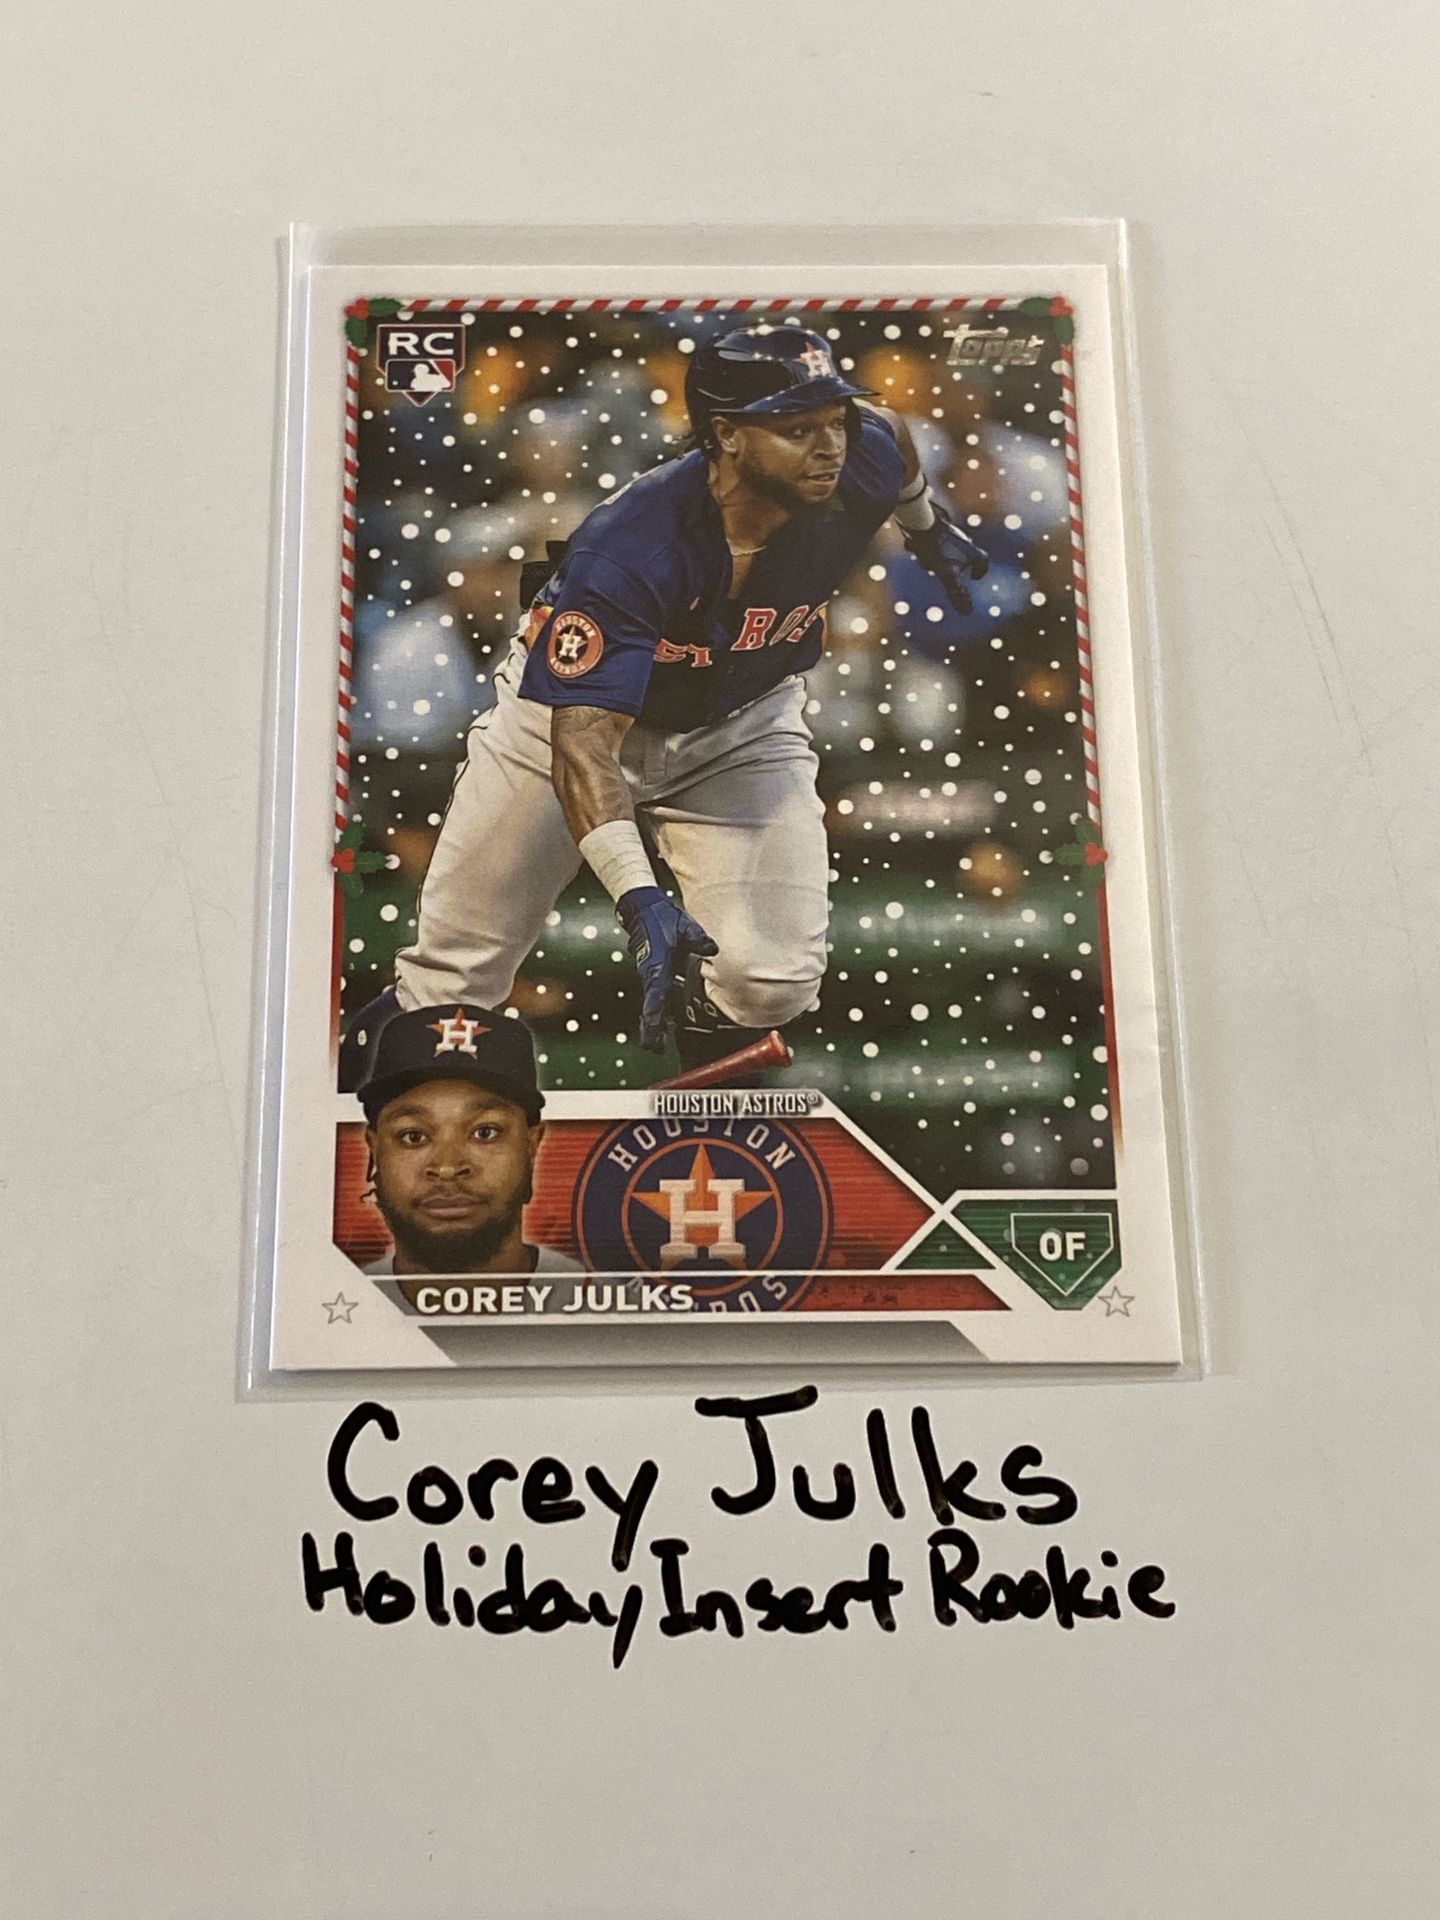 Corey Julks Houston Astros Outfielder Topps Short Print Insert Rookie Card. 